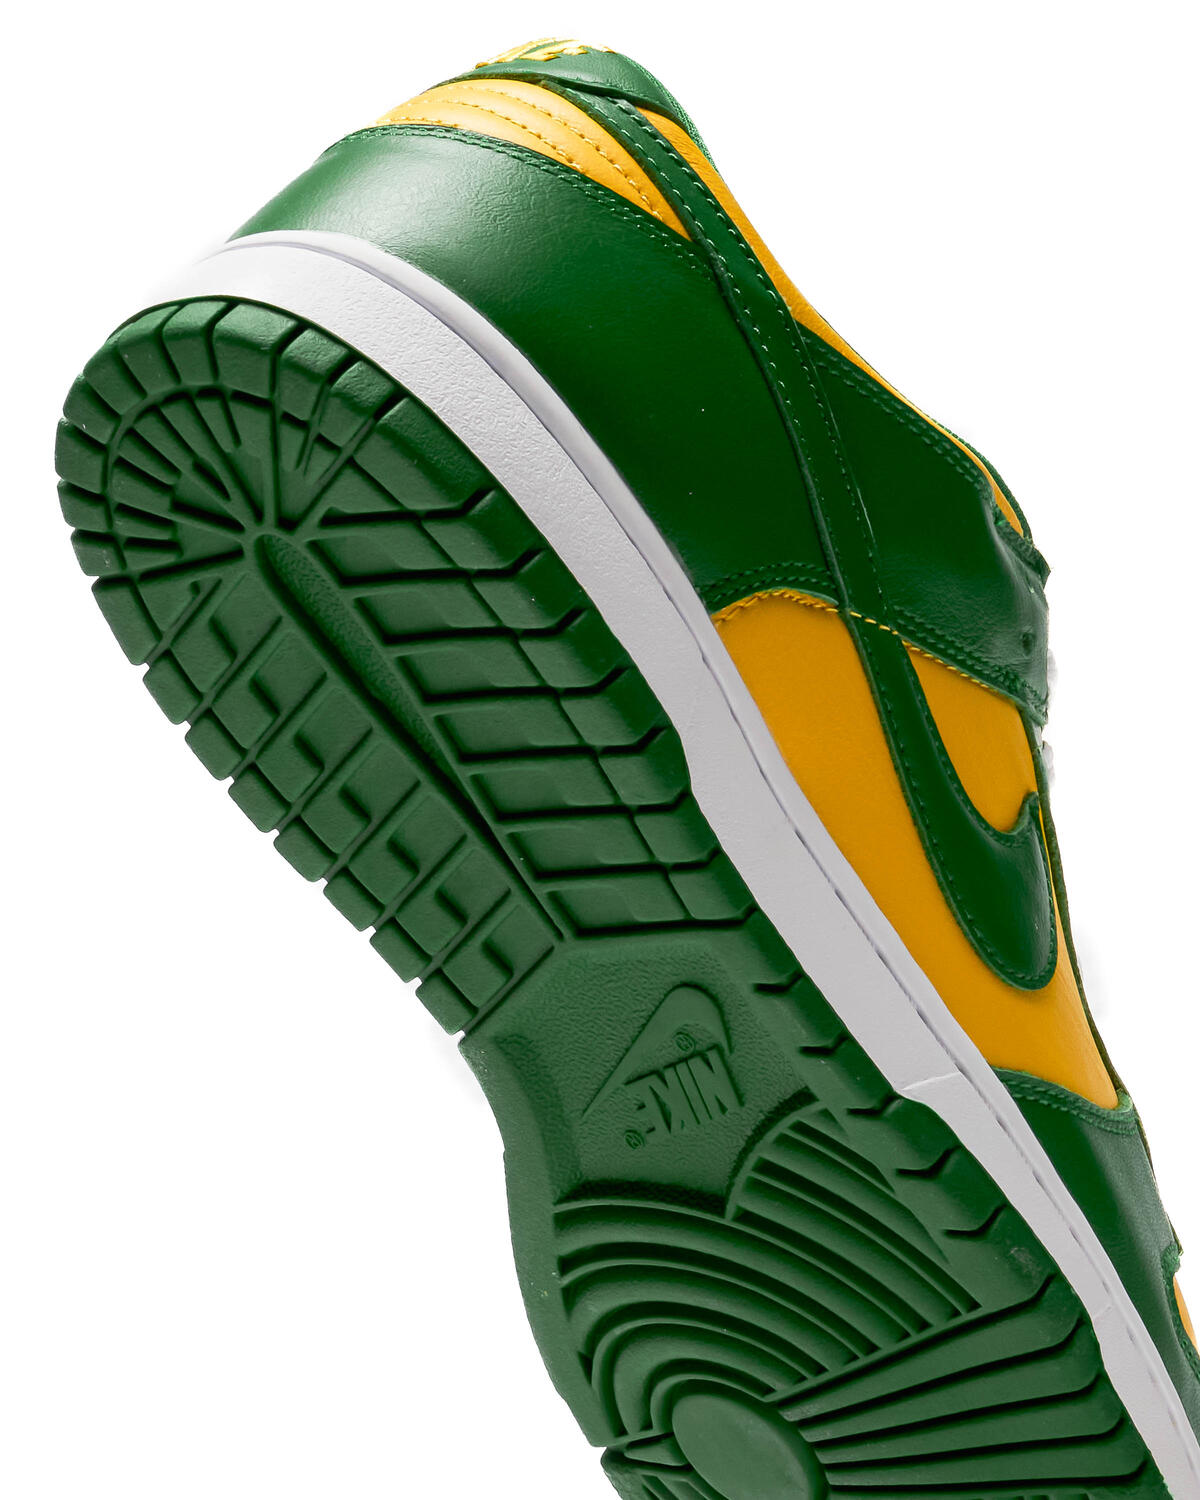 ST-AE SHOP - Nike Dunk Low SP 'Brazil' 2020 (CU1727-700)